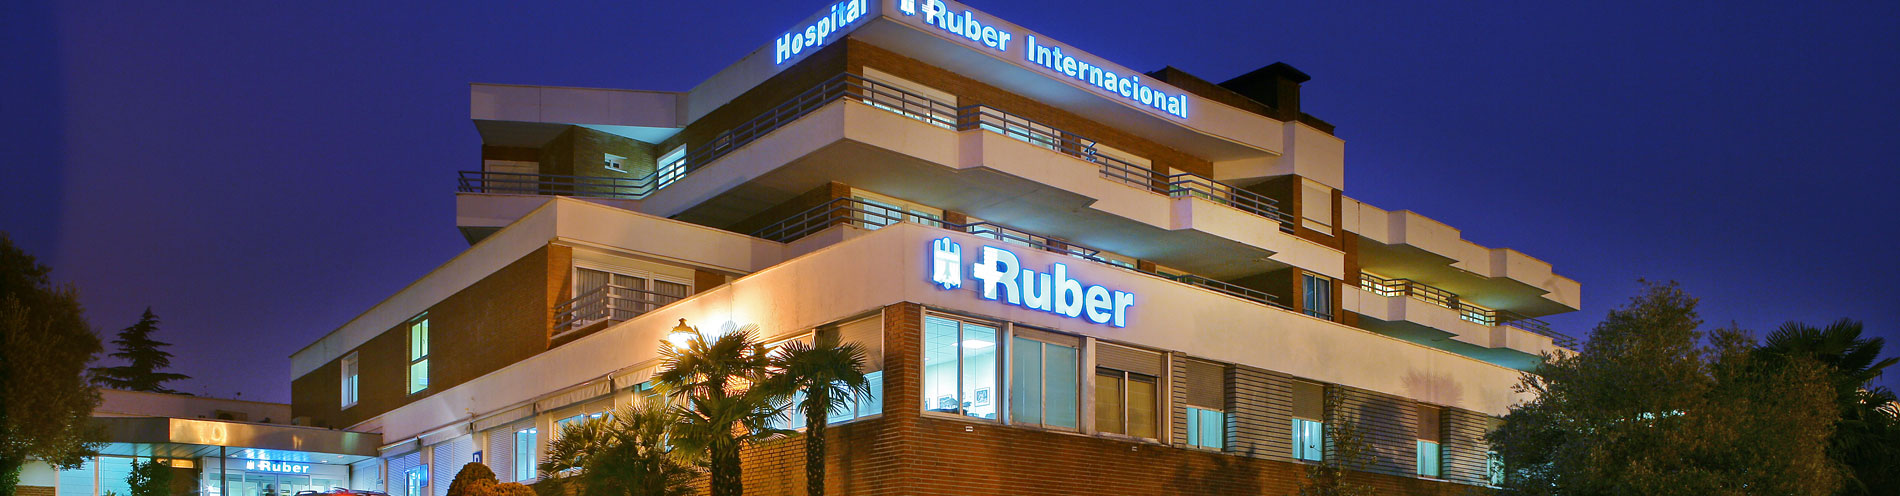 Hospital Ruber internacional